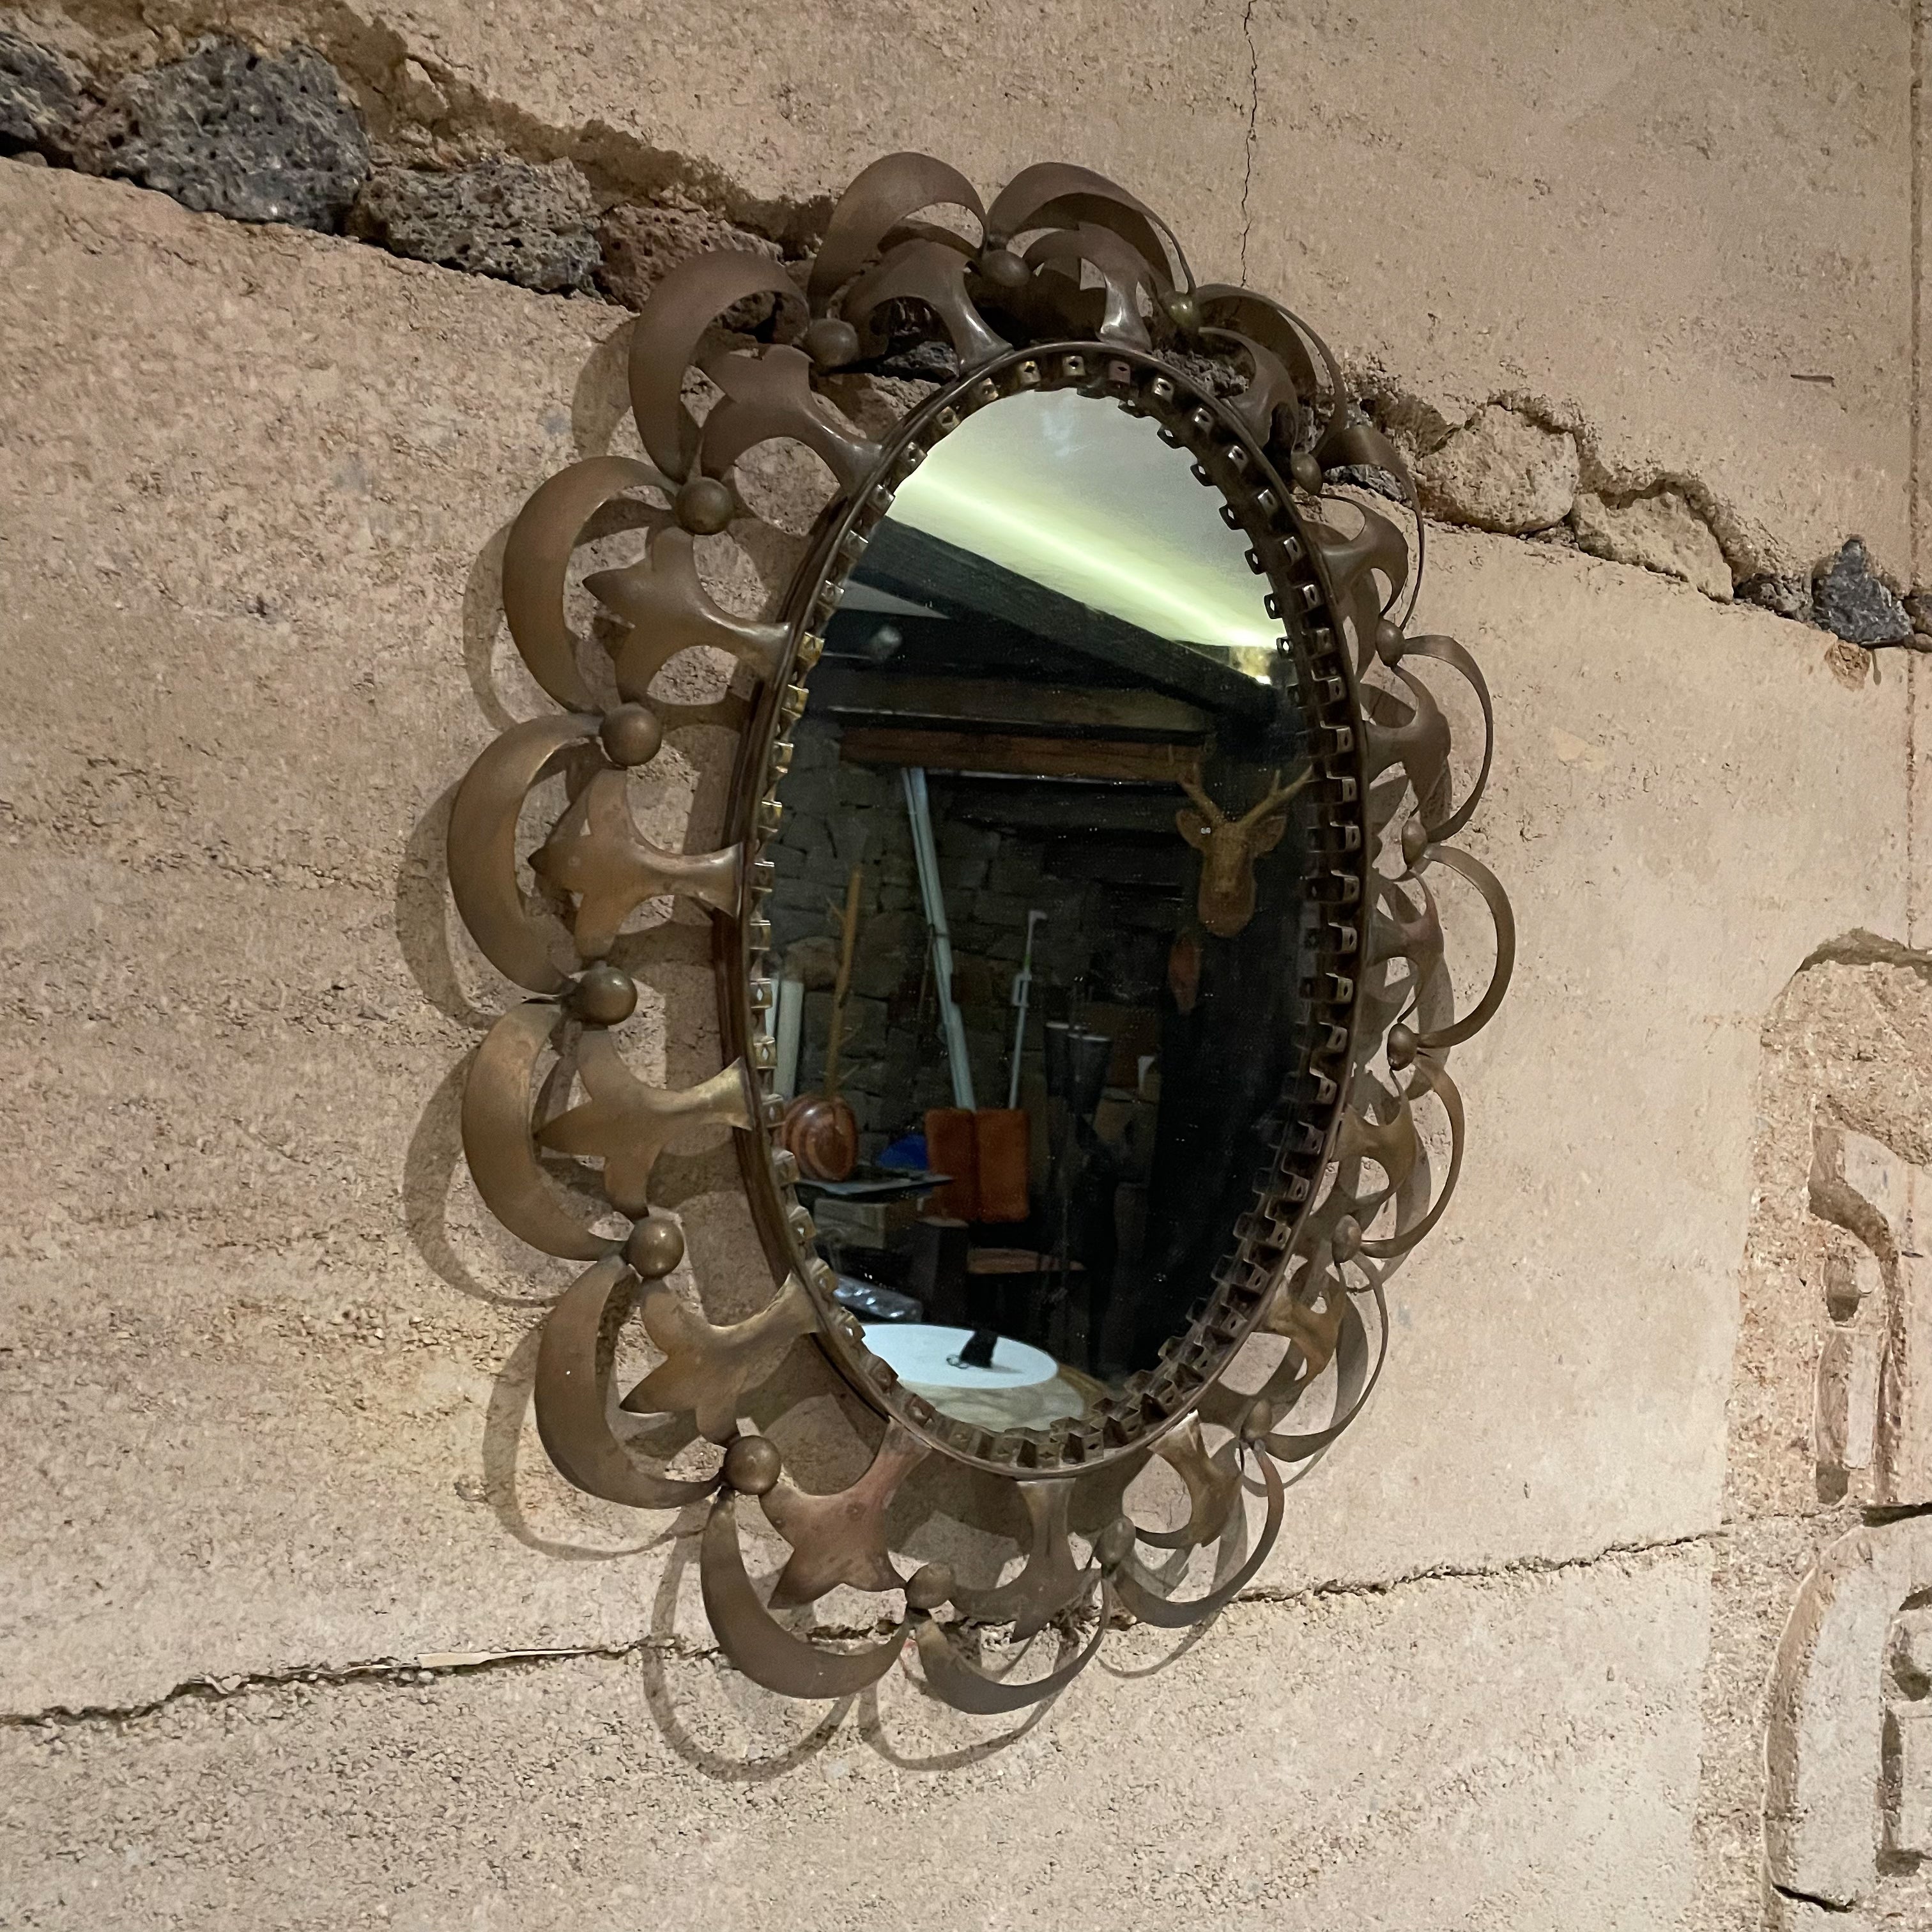 Antiker ovaler Spiegel aus massivem Messing, ca. 1940er Jahre.
Hollywood Regency La Barge Fontana Arte Ära
Unmarkiert 
Er kann horizontal oder vertikal aufgehängt werden.
Preowned Original unrestauriert Vintage Zustand Patinated Brass.
Spiegel ist